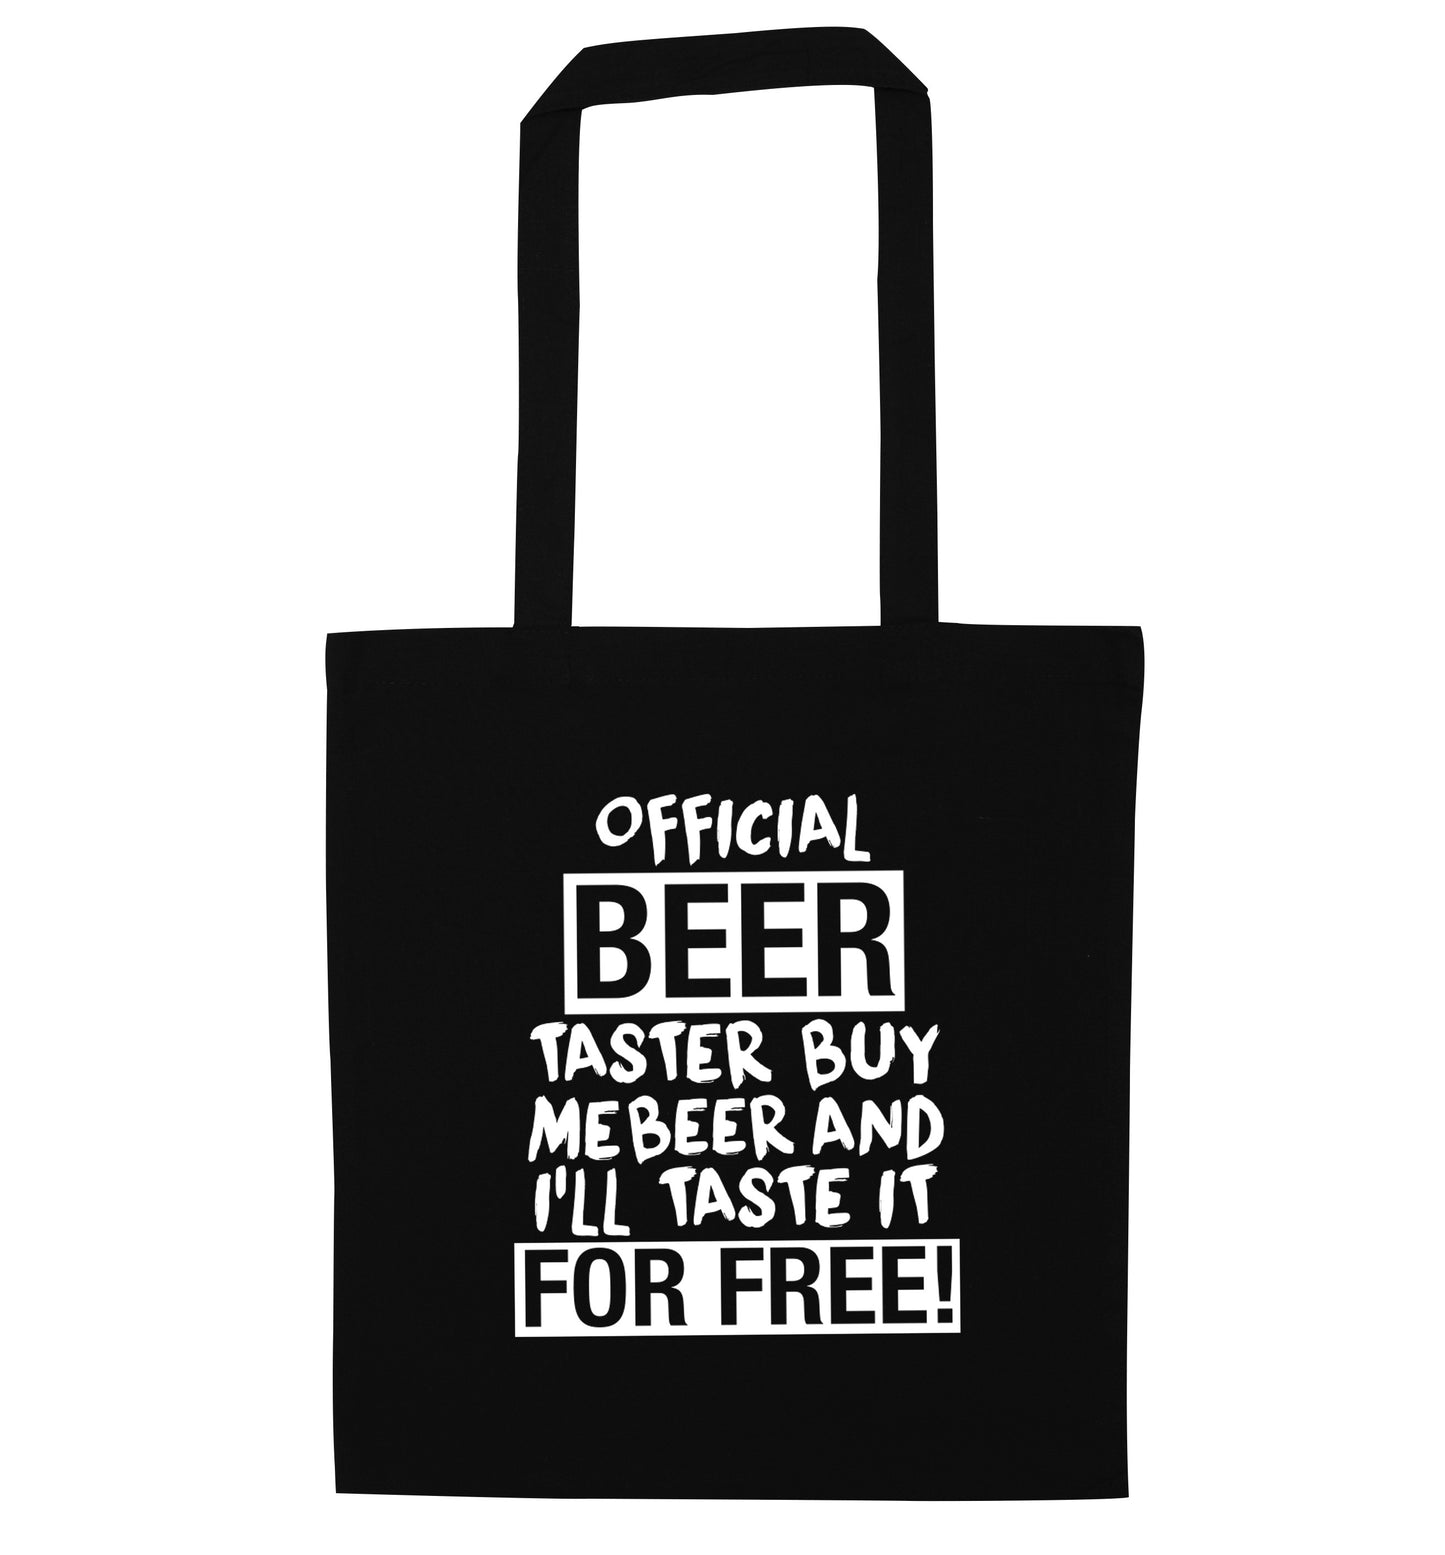 Official beer taster buy me beer and I'll taste it for free! black tote bag